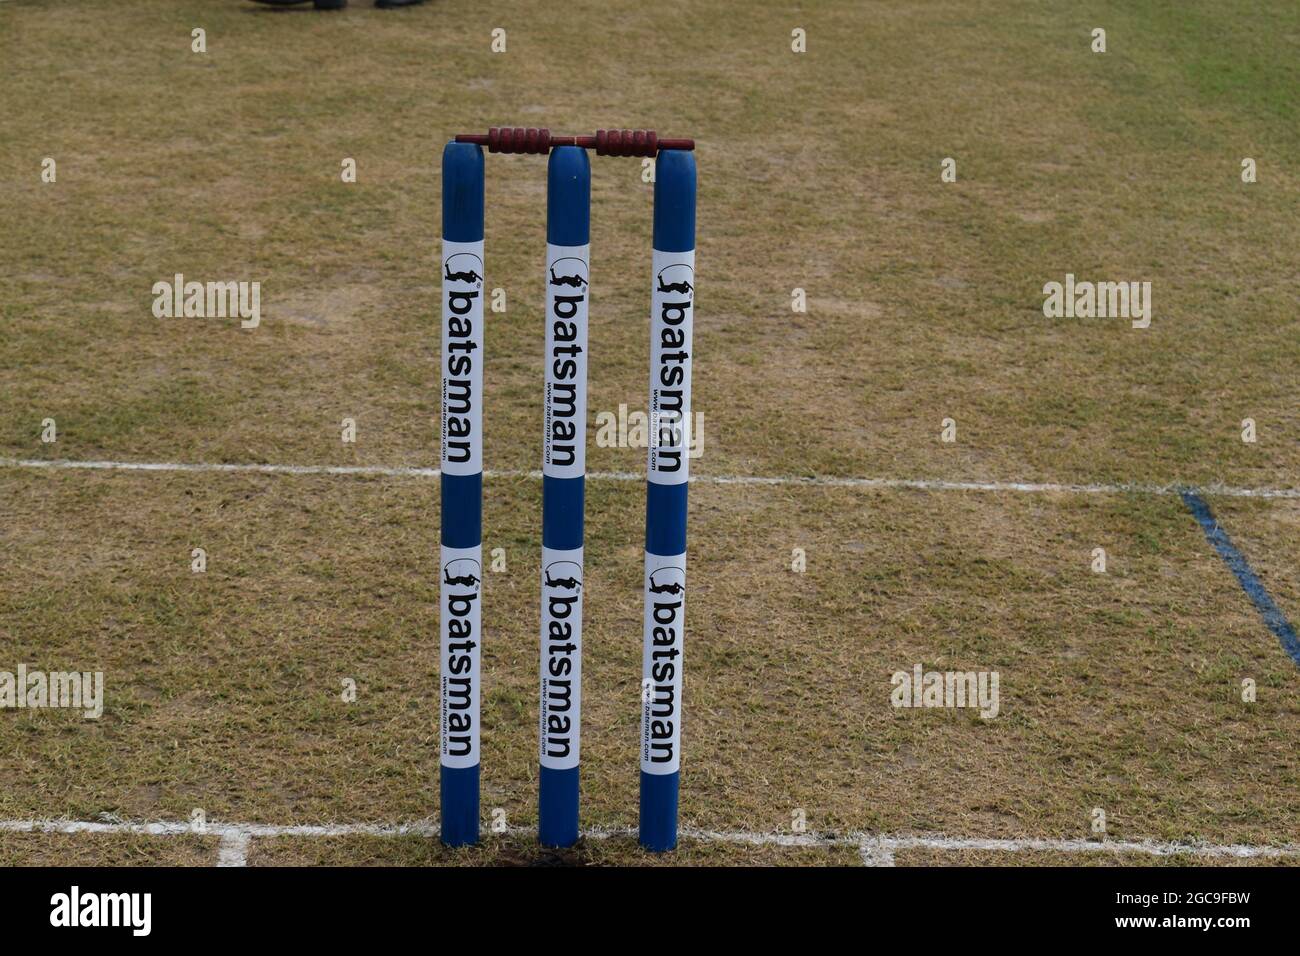 Stumps ready for play at a cricket match. Sri Lanka. Stock Photo